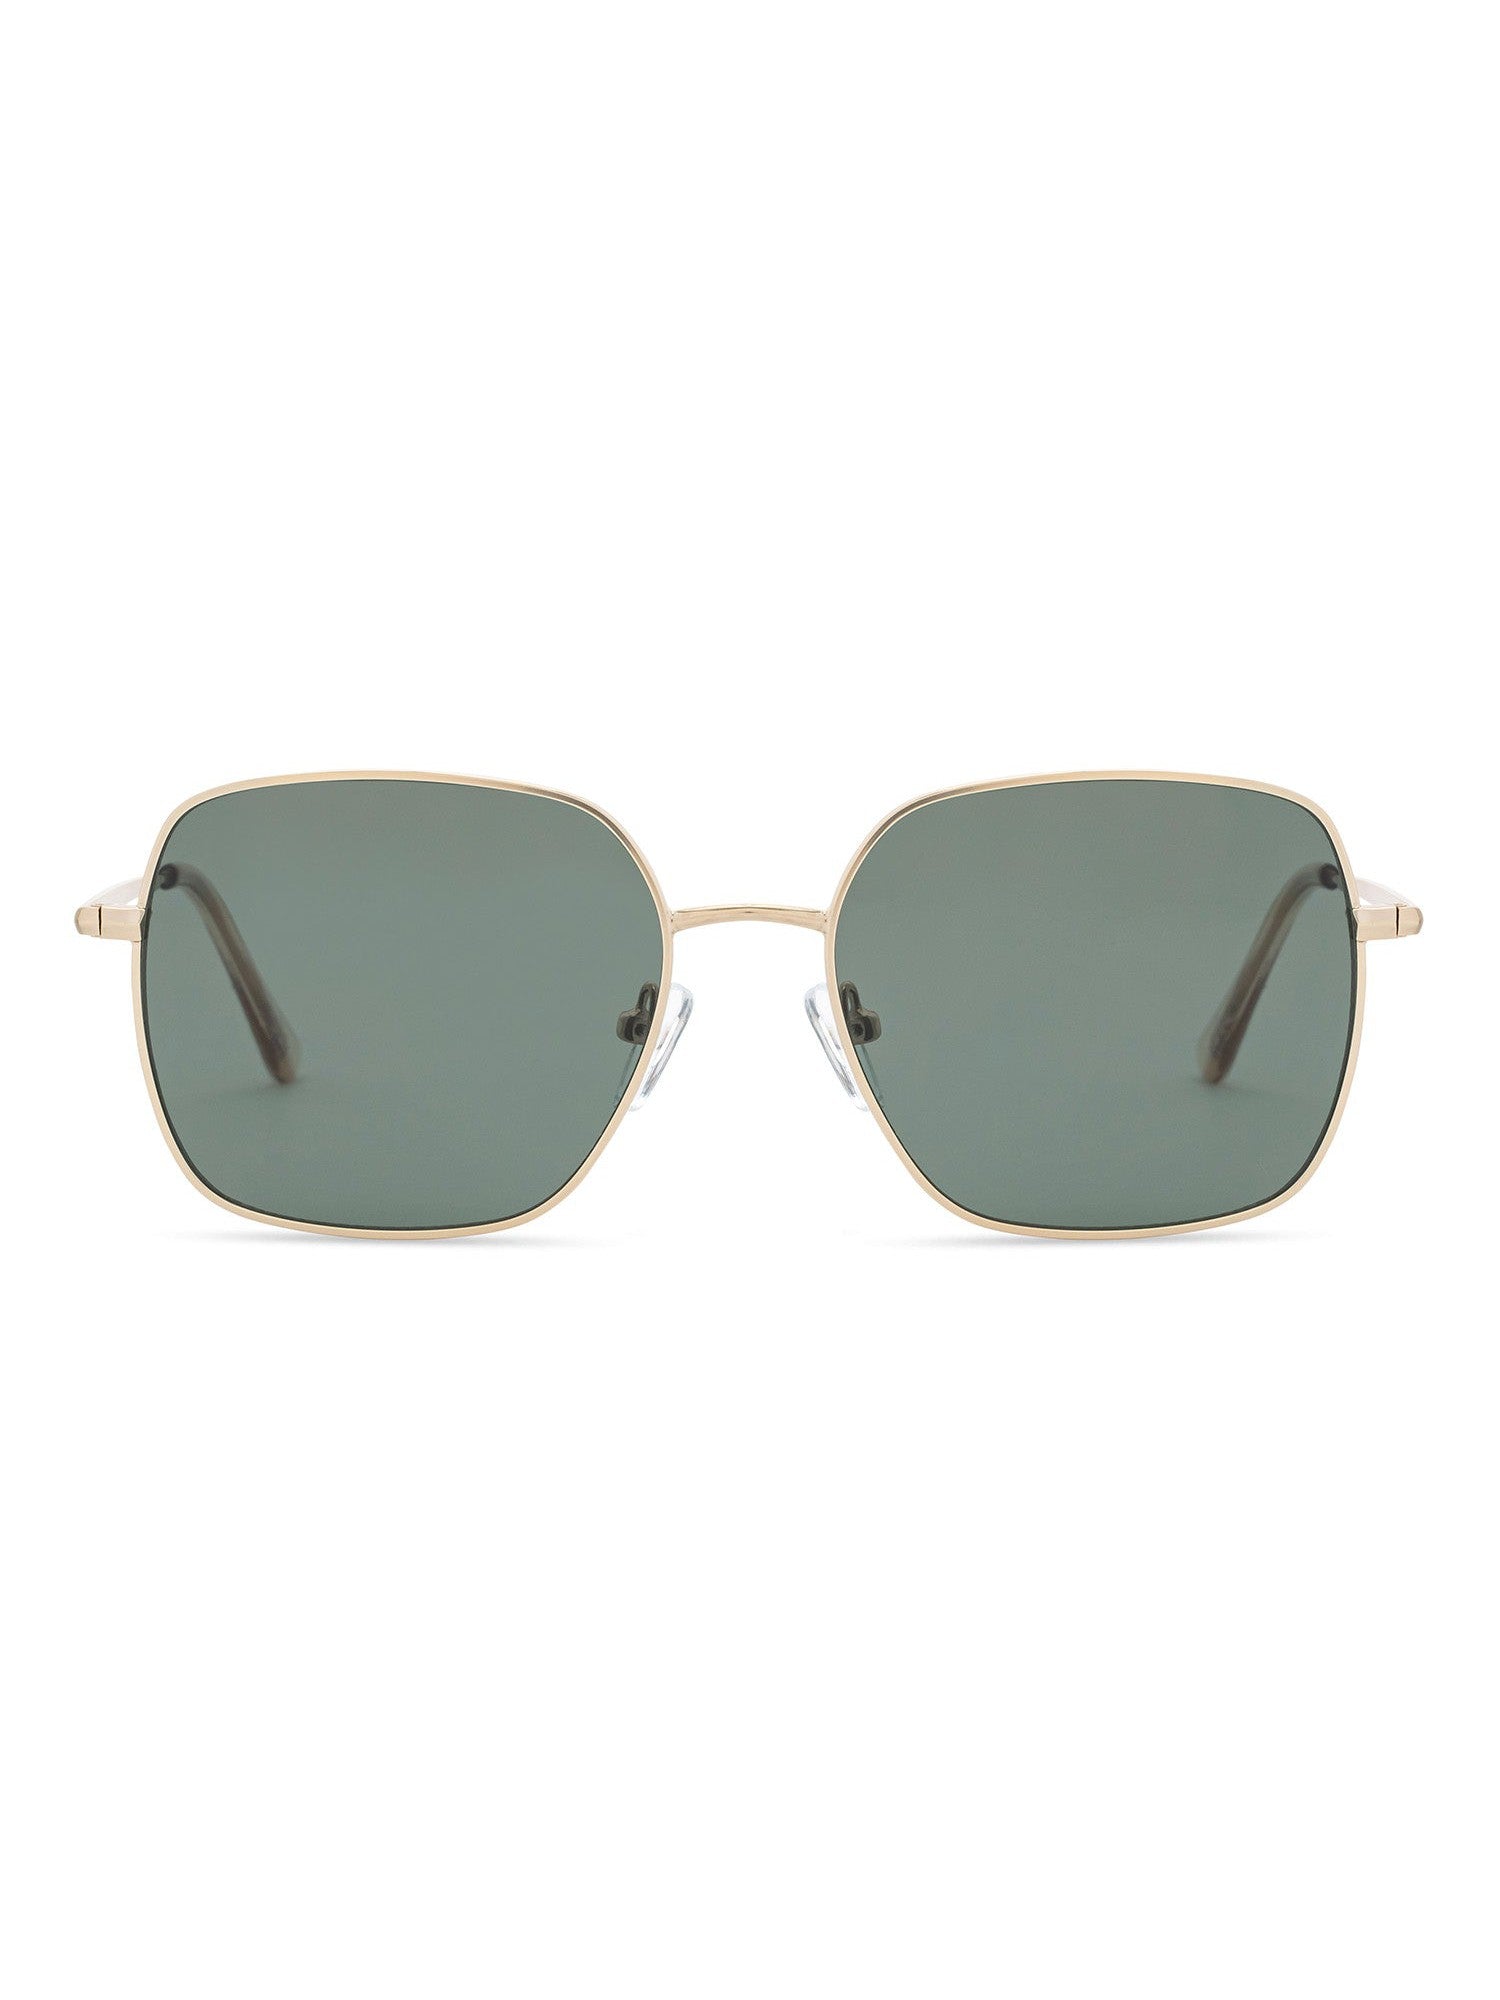 DREW Premium Sunglasses with "SHADES" Signature Font - Rae Dunn Wear - Sunglasses